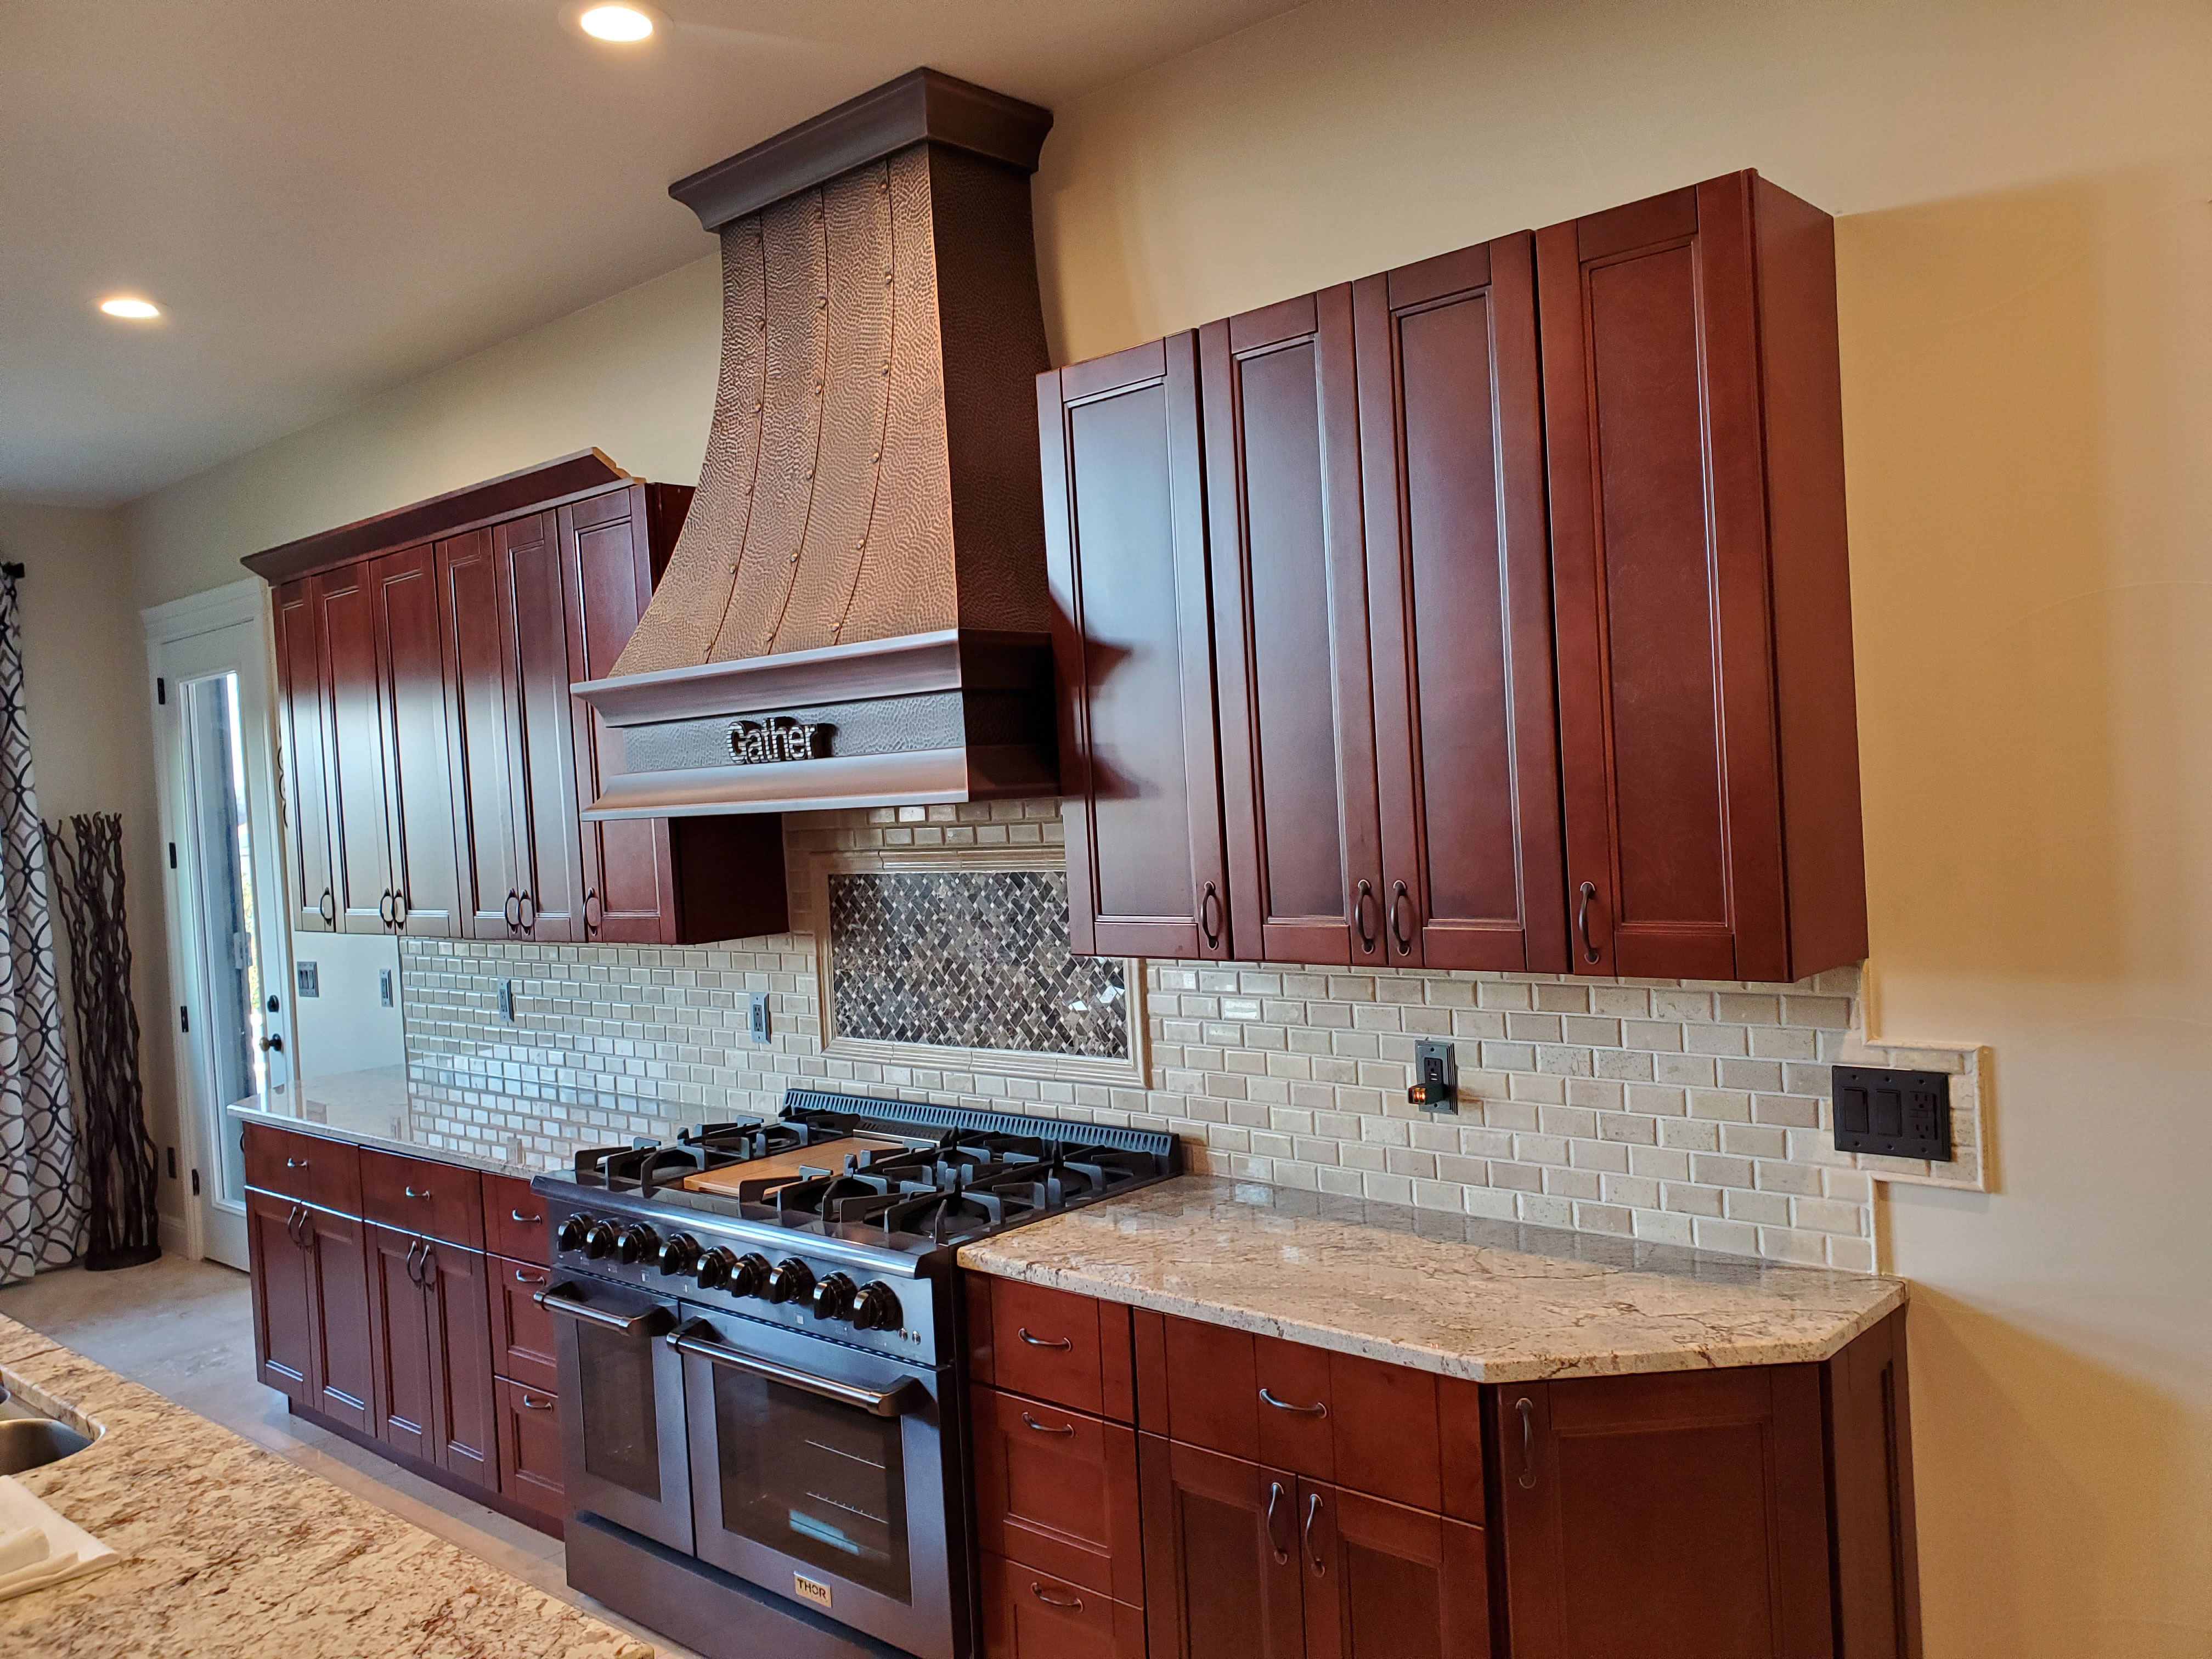 An industrial kitchen renovation featuring stylish range hood design, brown kitchen cabinets, marble countertops, brick backsplash